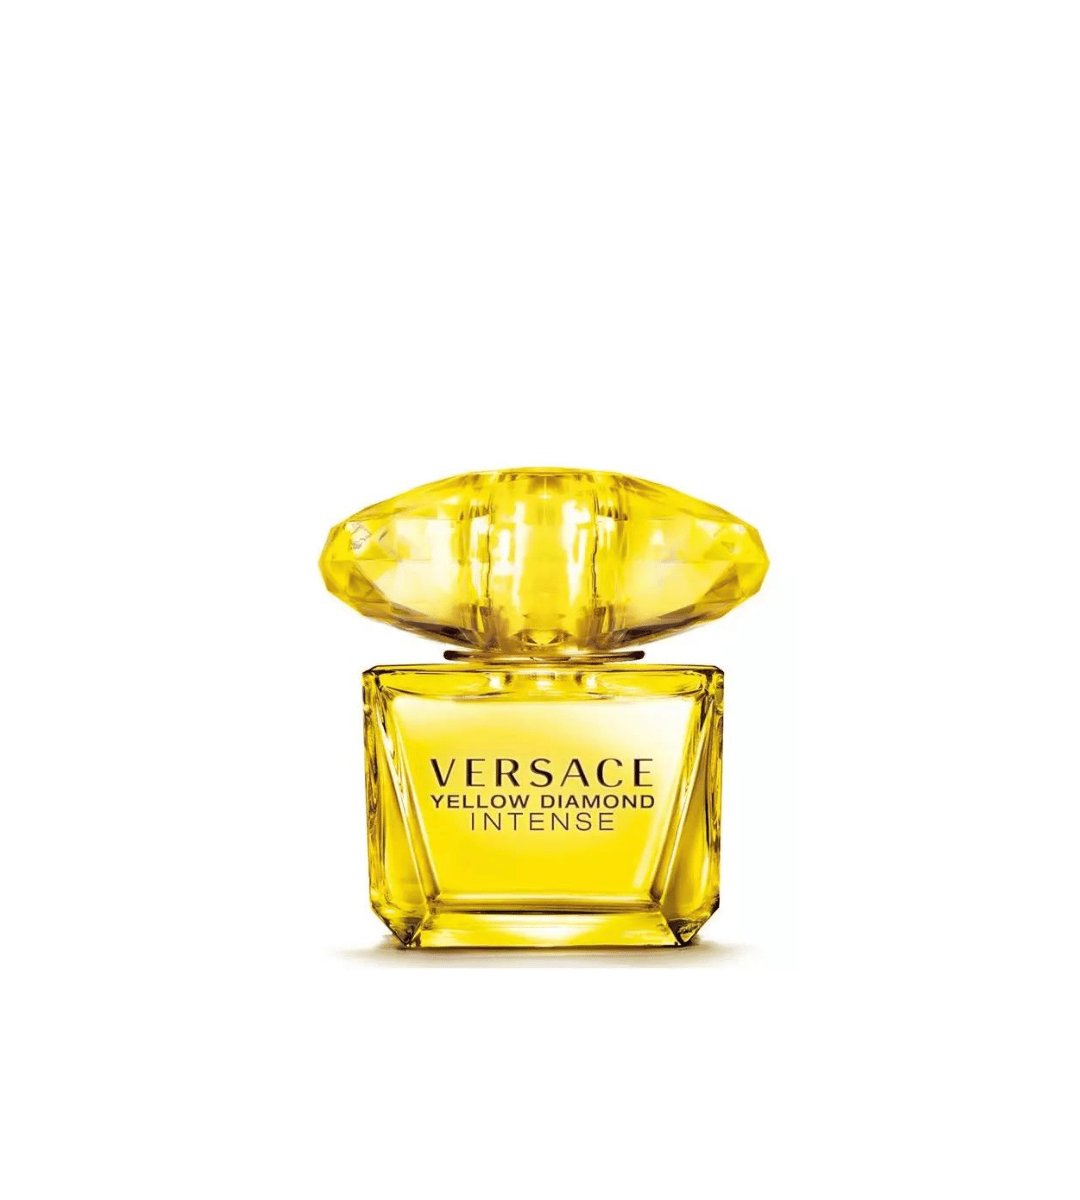 Versace YELLOW DIAMOND INTENSE Eau Parfum de